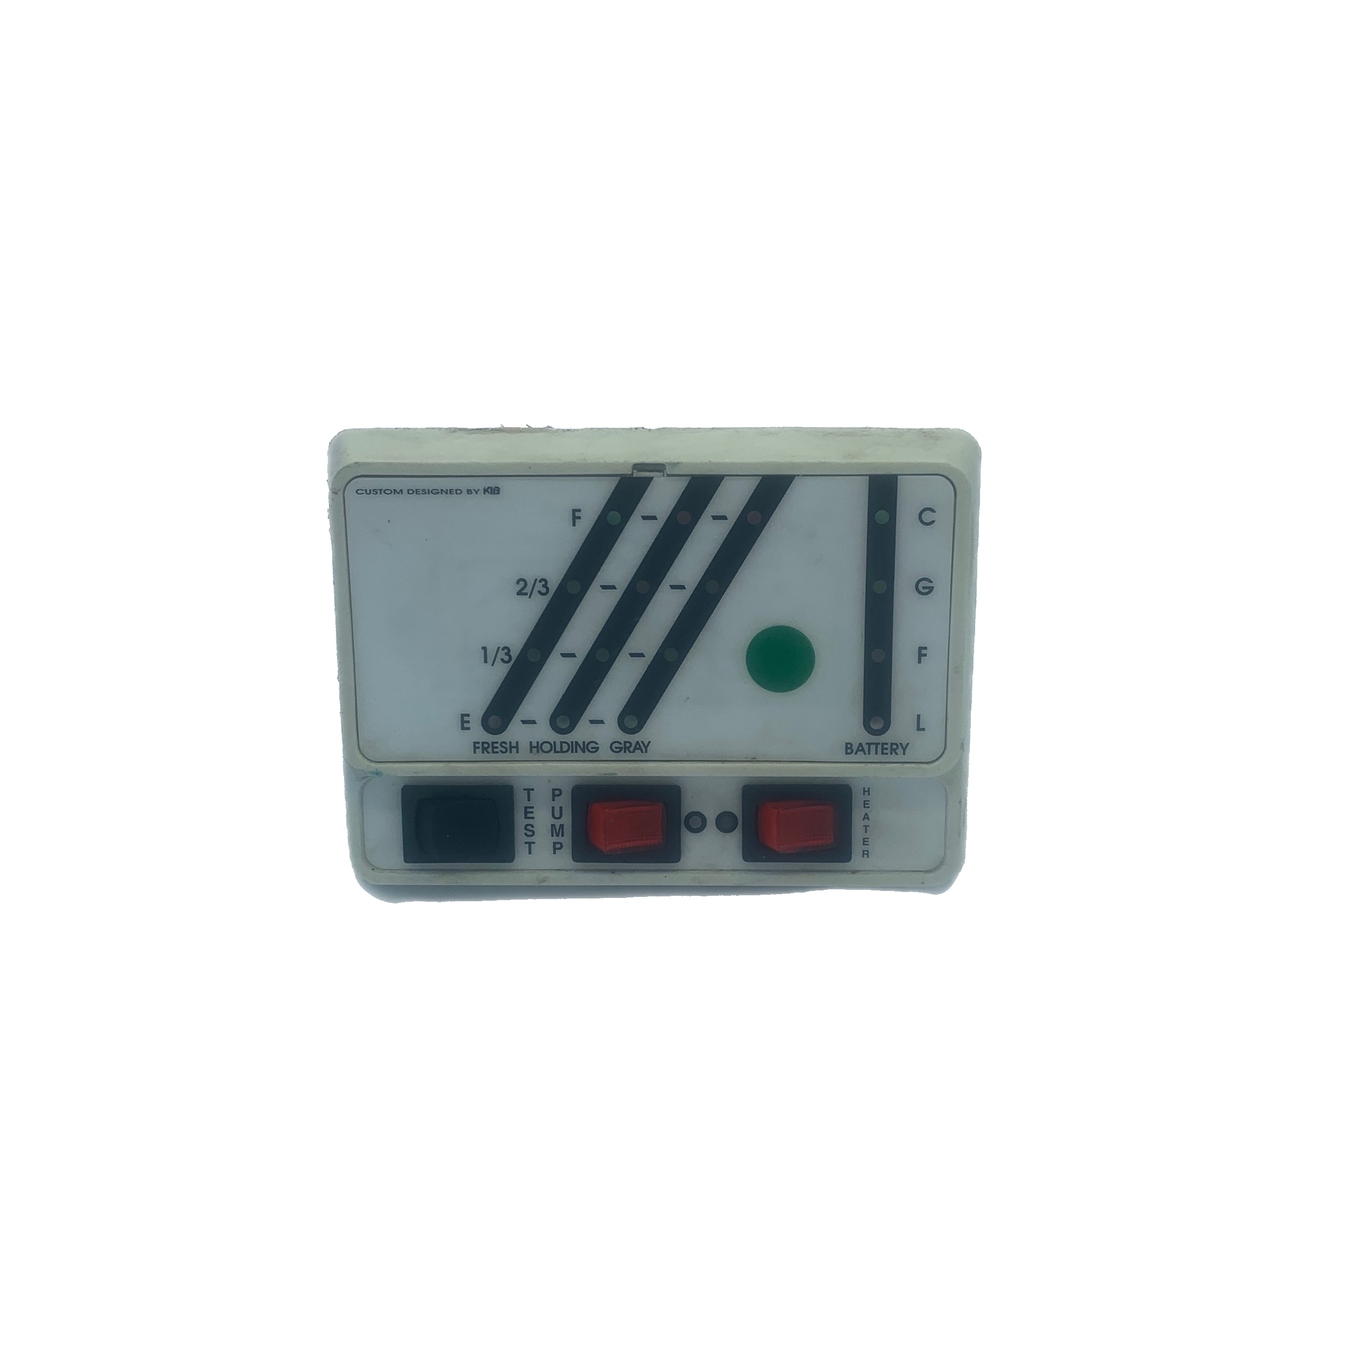 Used RV Tank Monitor